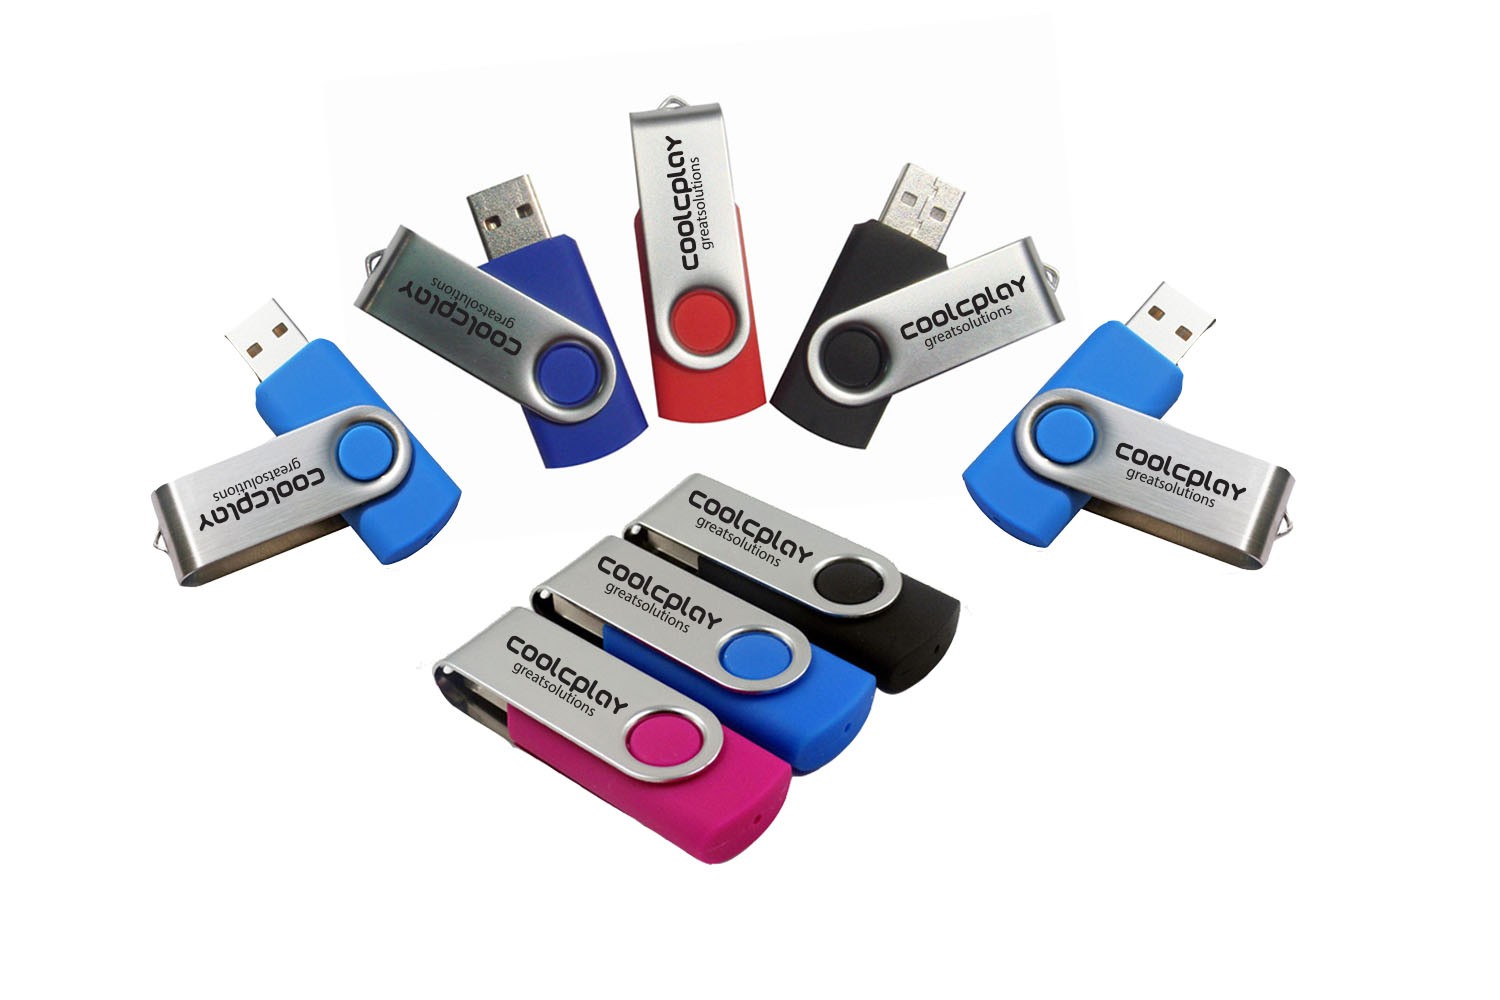 Colorful 512 MB USB Flashdrive With Swivel Cap